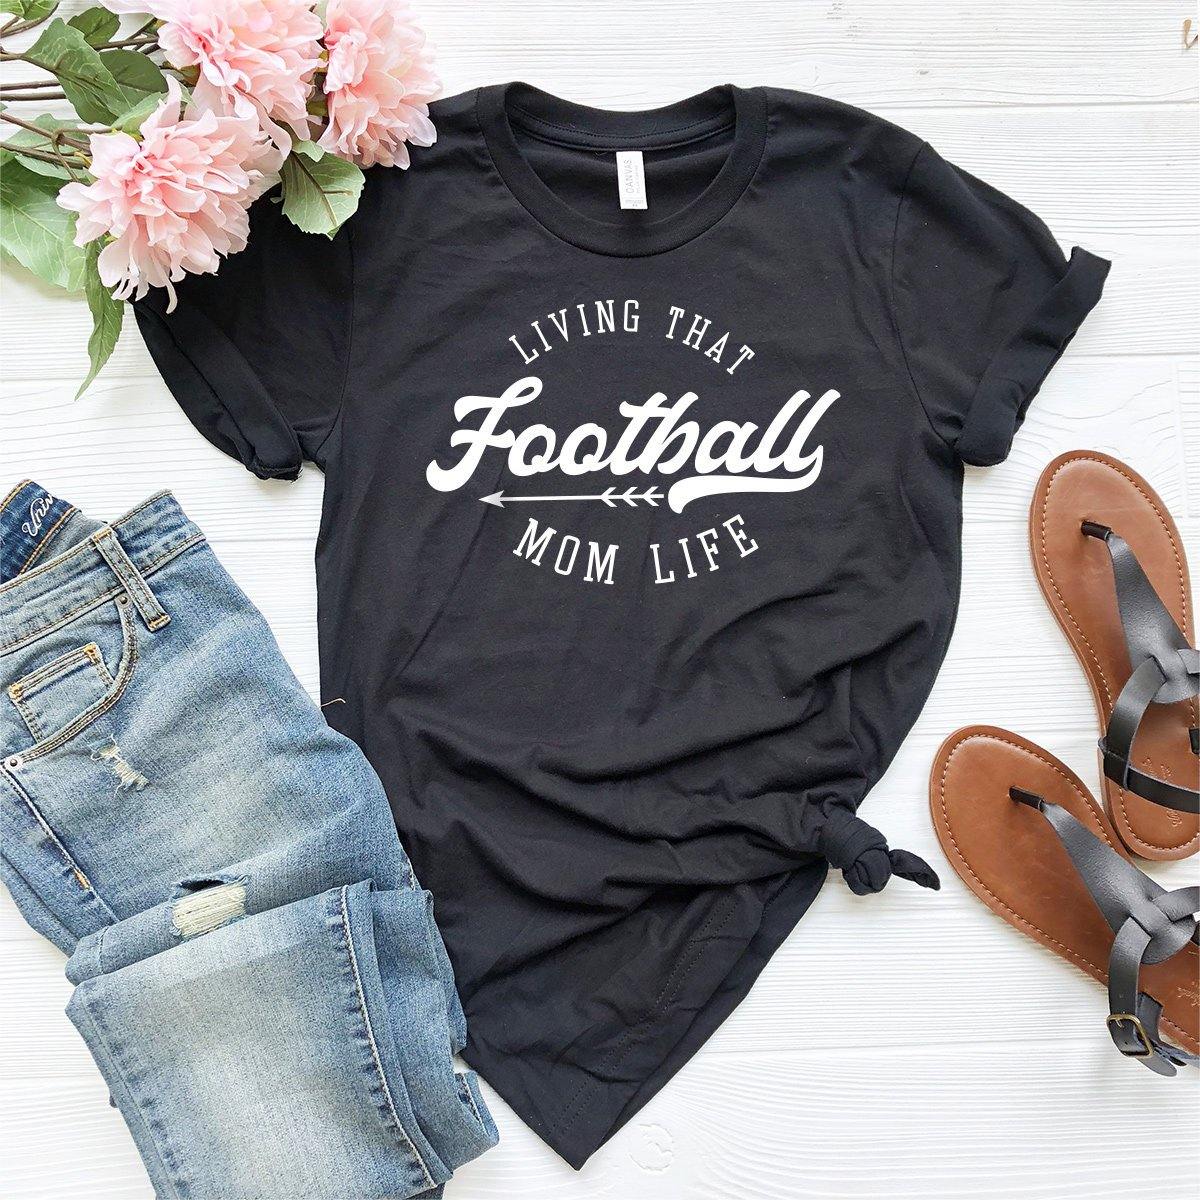 Football Mom Shirt,Women's Football Shirt,Football Mom Tee,Football Mom Shirts,Football Mama Shirts - Fastdeliverytees.com